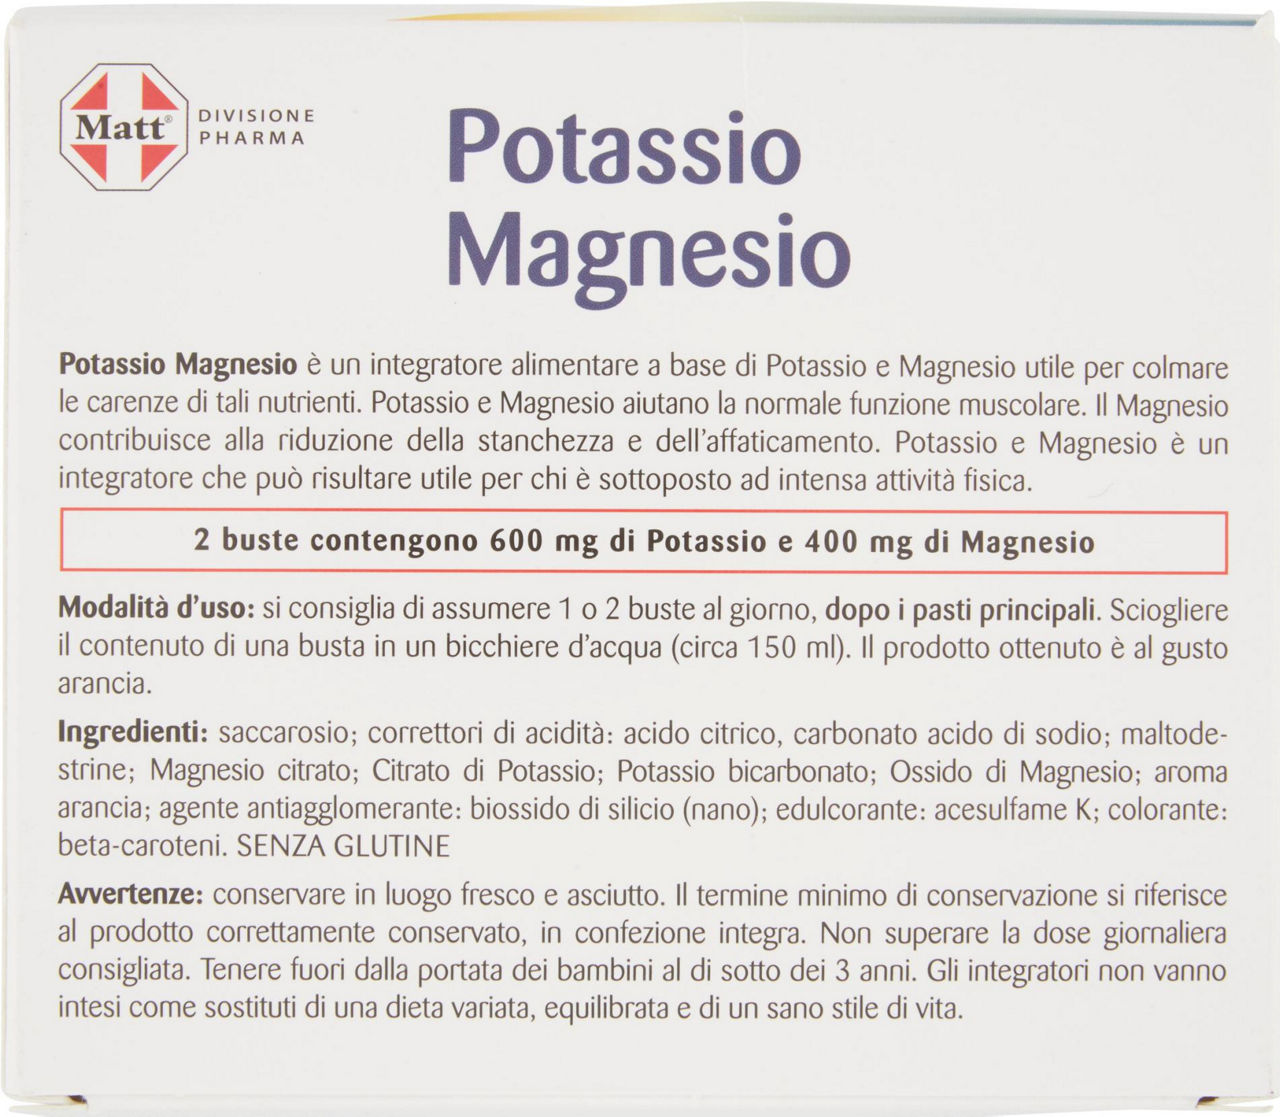 POTASSIO E MAGNESIO GUSTO ARANCIA MATT & DIET PHARMA  BUSTE PZ.20 GR.200 - 2